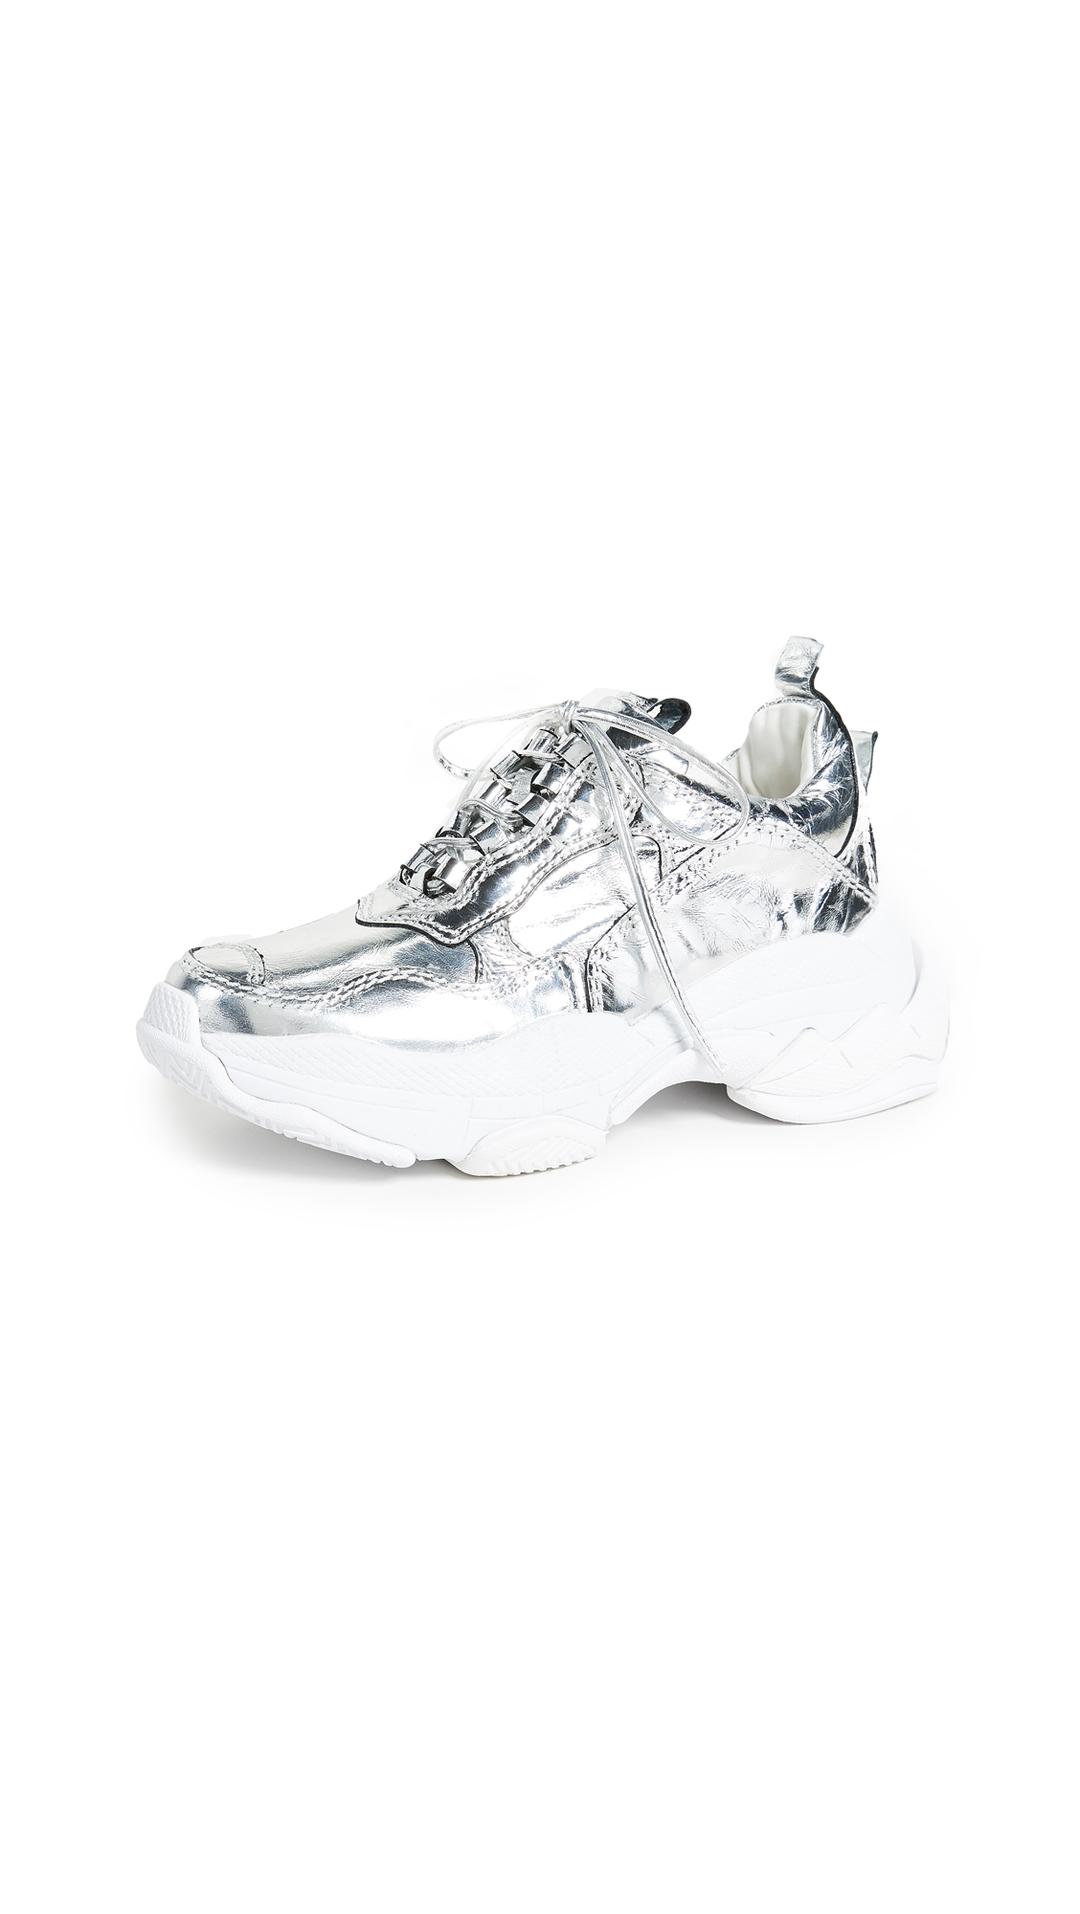 metallic athletic shoes